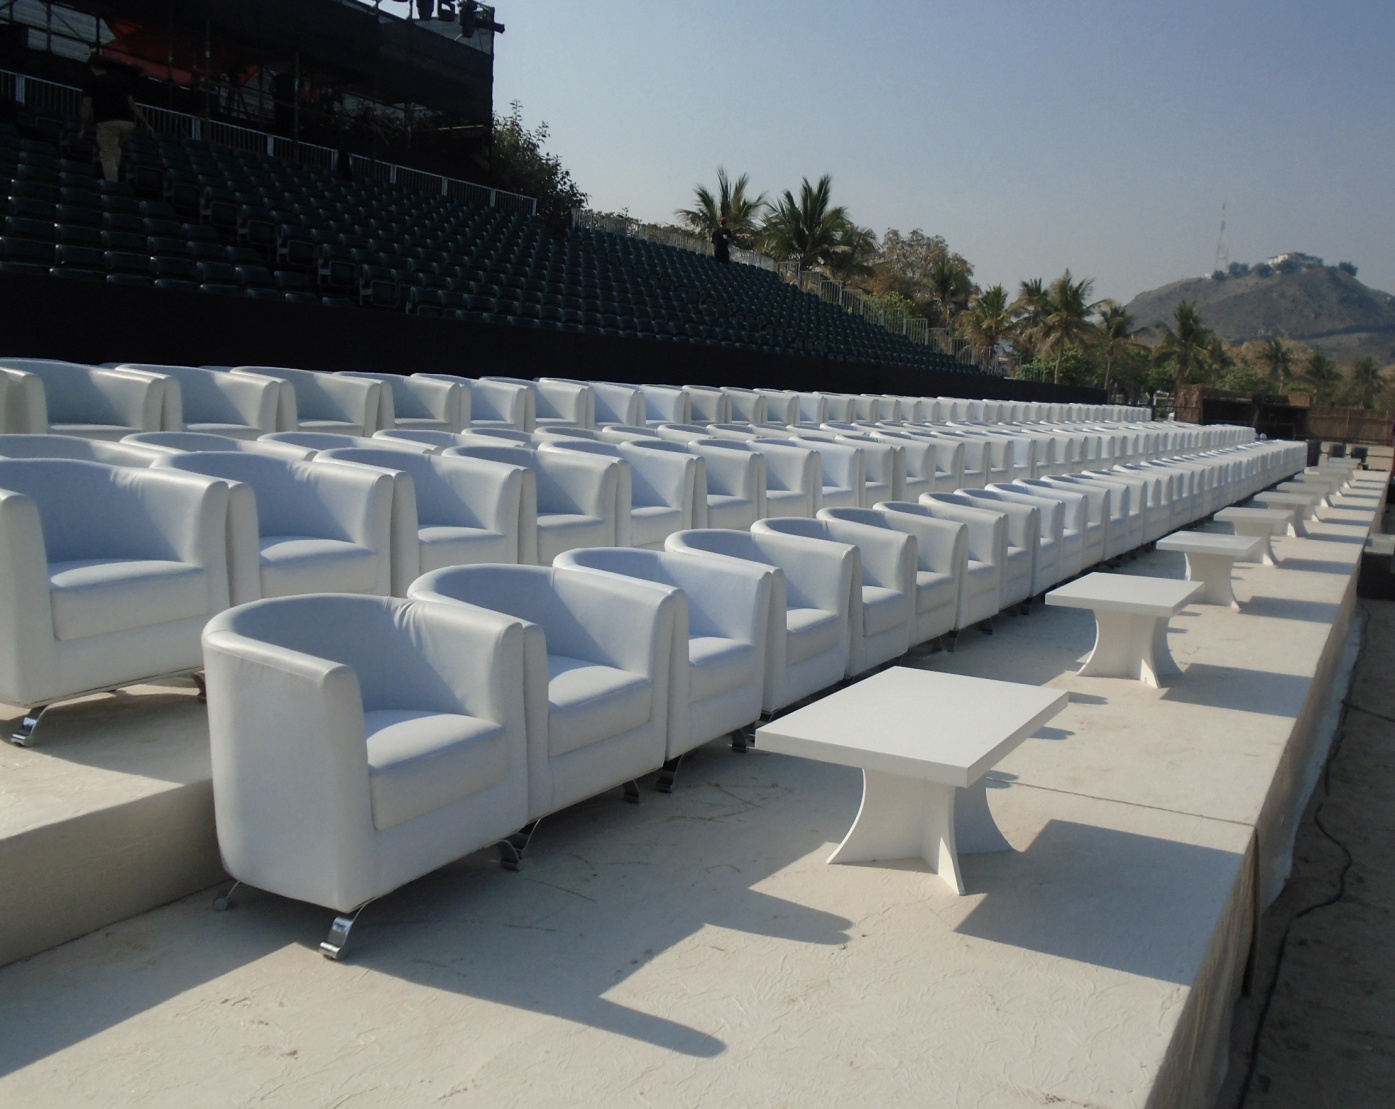 Benefits of Hiring Furniture for an Event - Furniture Rentals in Dubai | Abu Dhabi | UAE